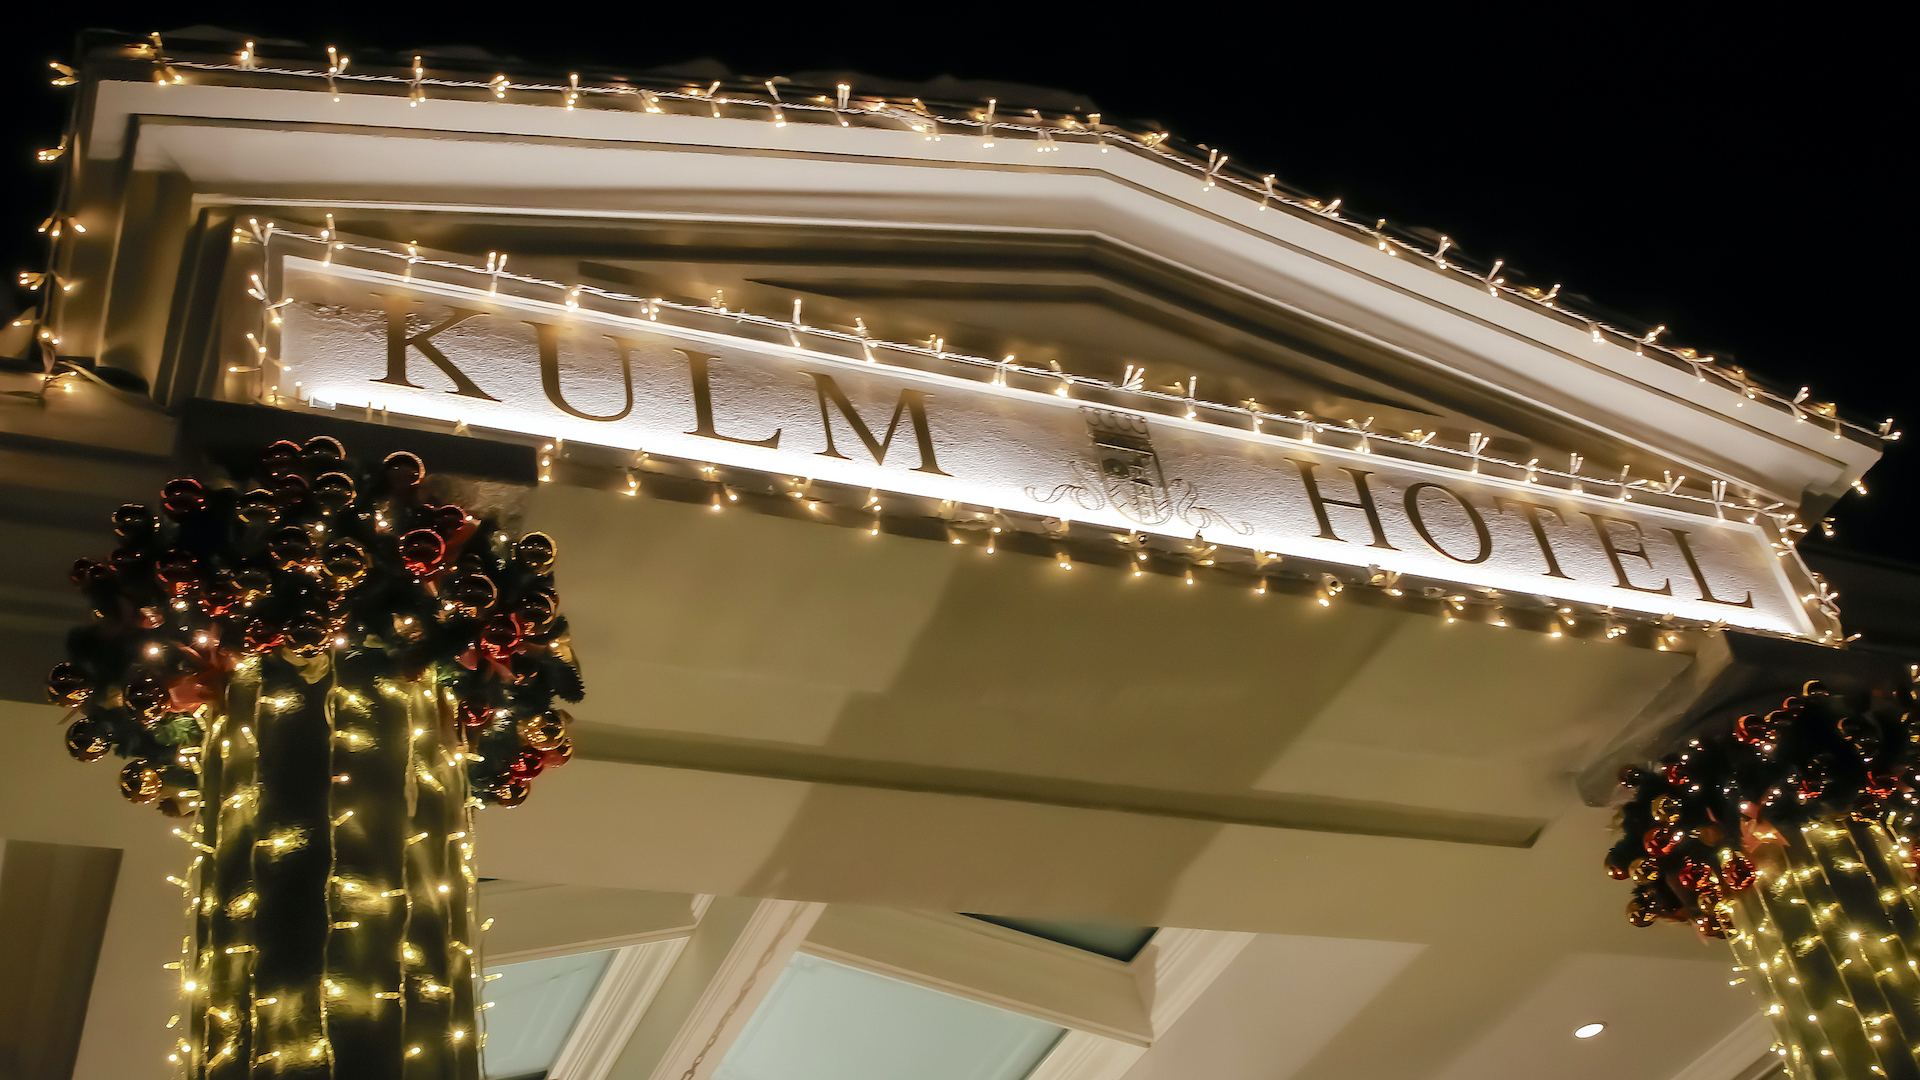 REVIEW The Kulm St. Moritz: uno de los mejores hoteles de Suiza